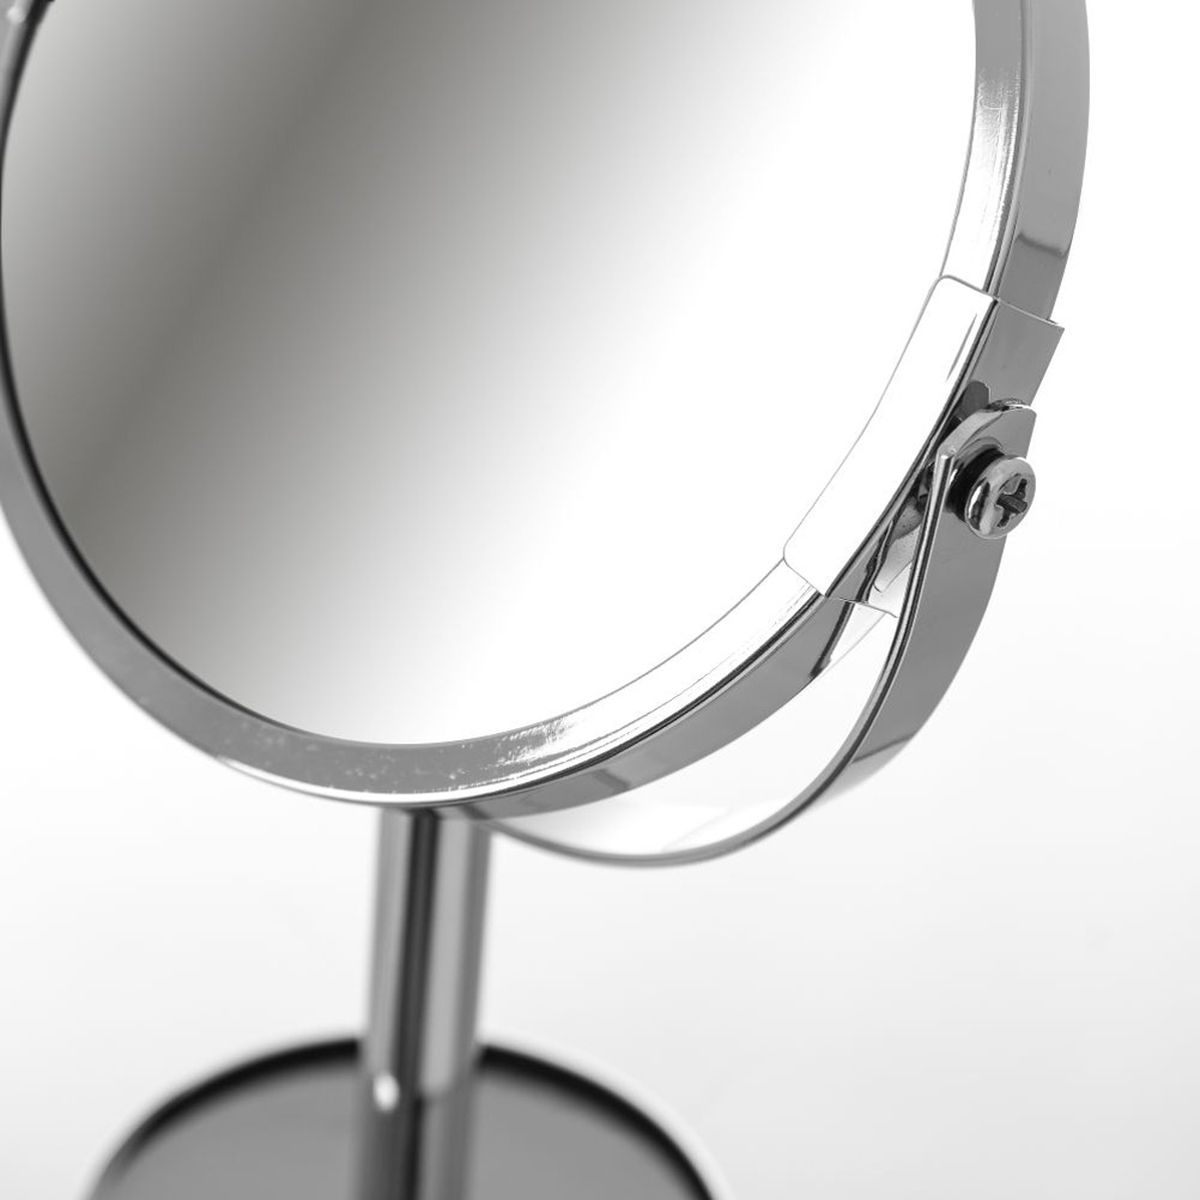 Double round mirror on stand - 21.5 cm